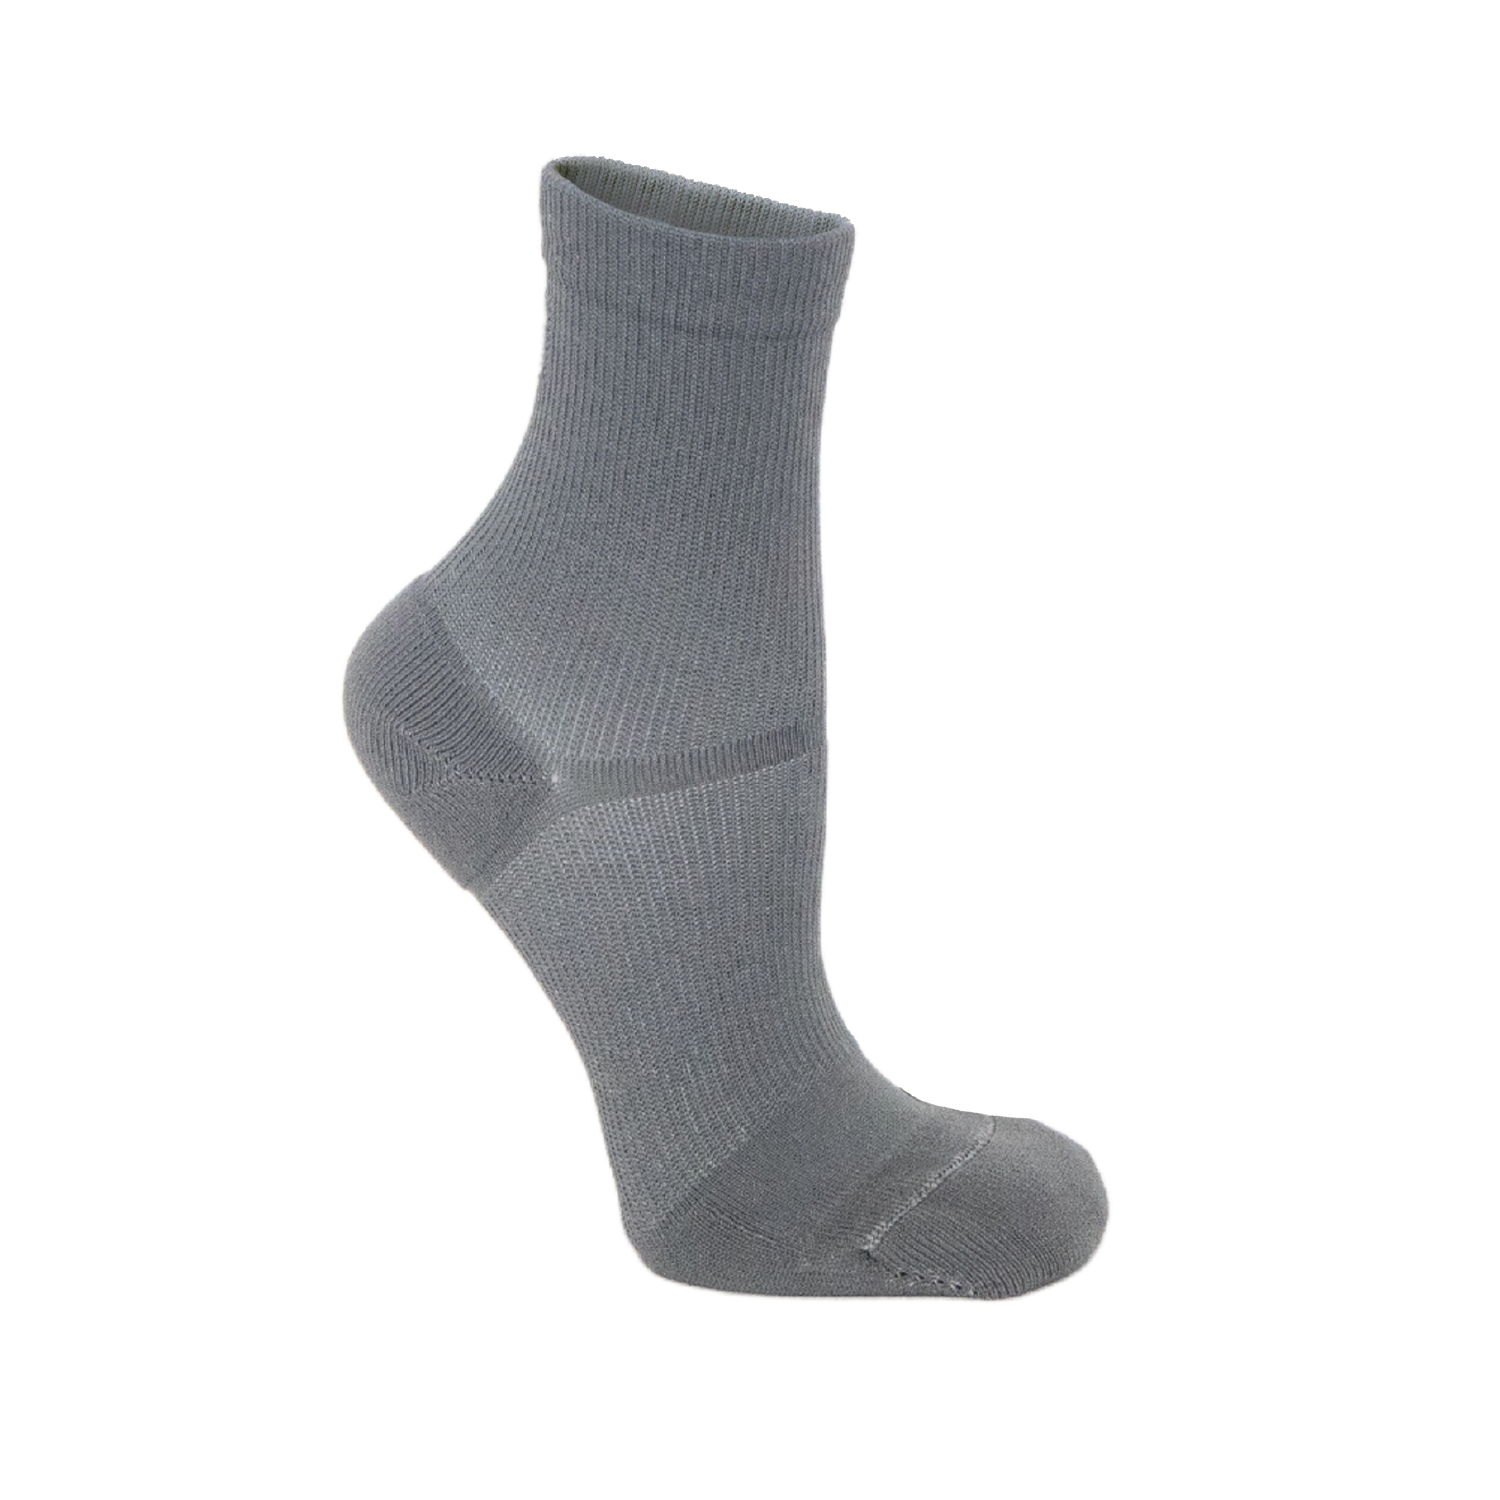 The Alpha Shock Non-Traction Dance Socks - Accessories, Apolla ALPHANT